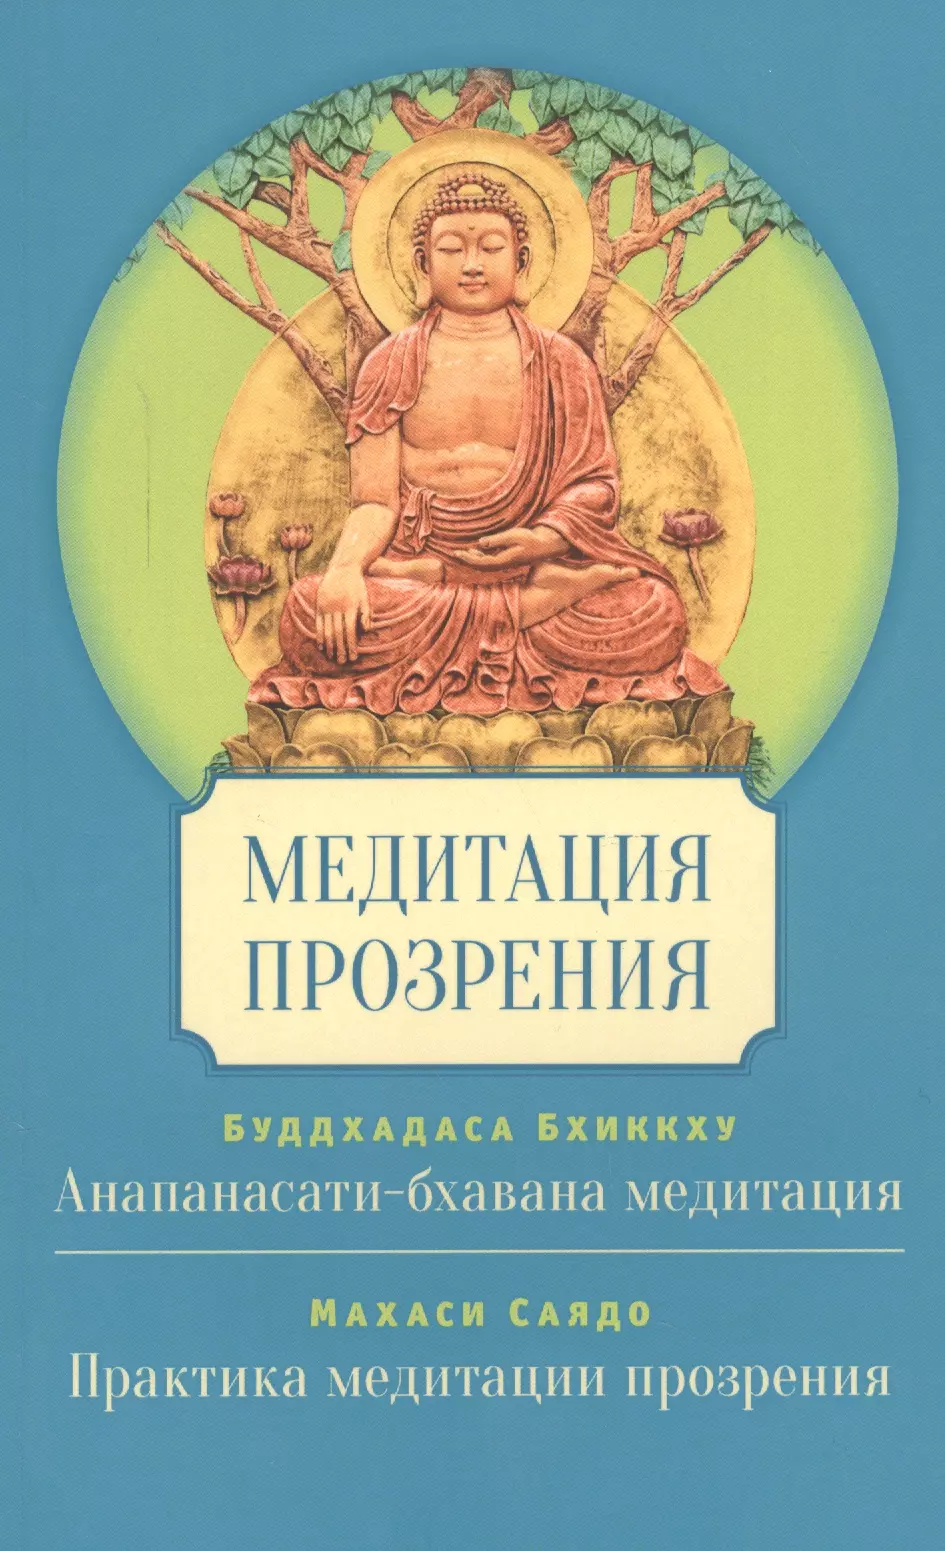 буддхадаса б махаси с медитация прозрения Медитация прозрения